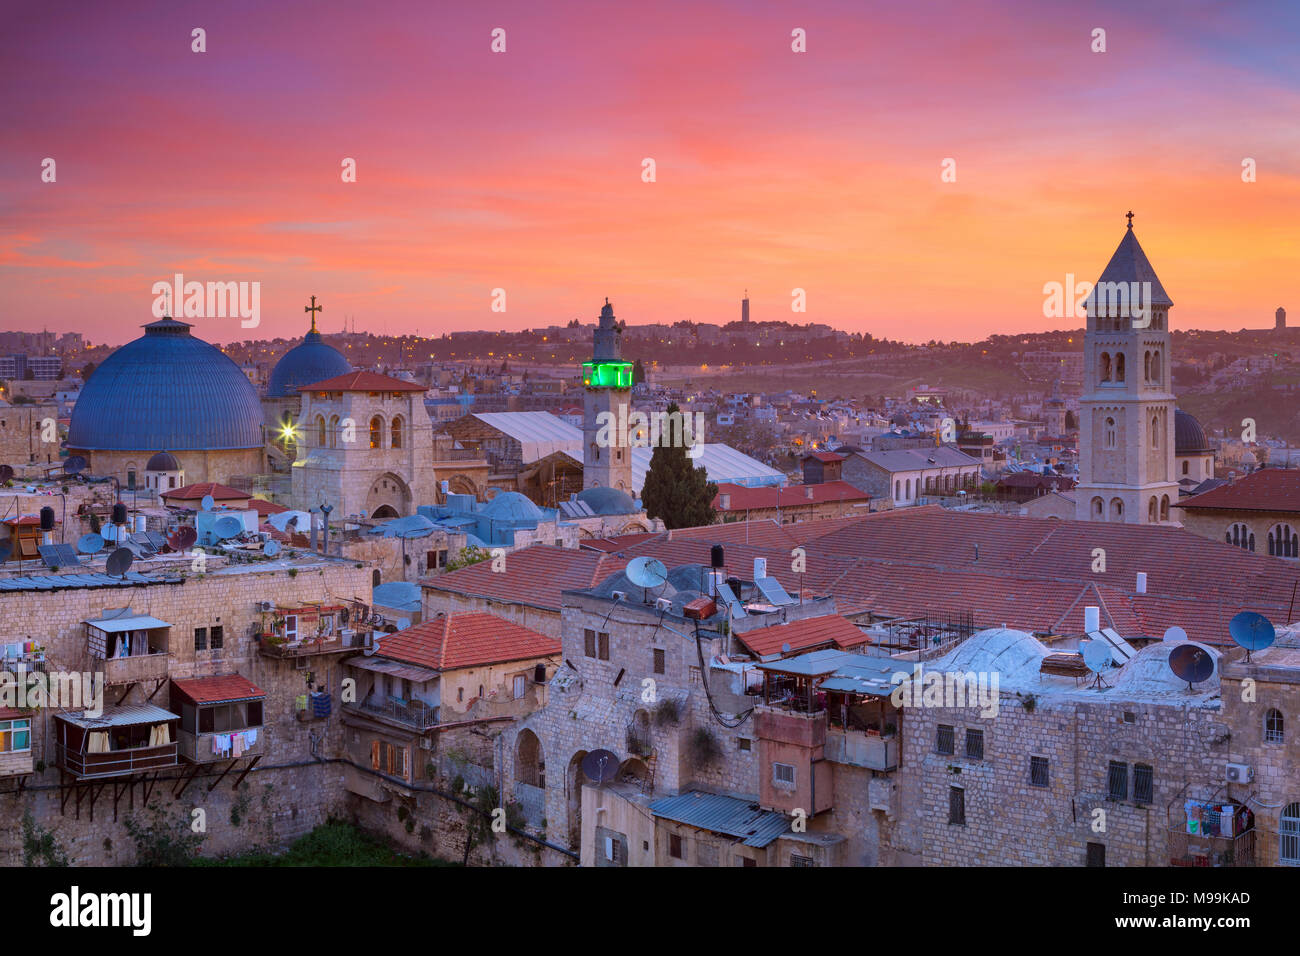 Gerusalemme. Cityscape immagine della città vecchia di Gerusalemme, Israele a sunrise. Foto Stock